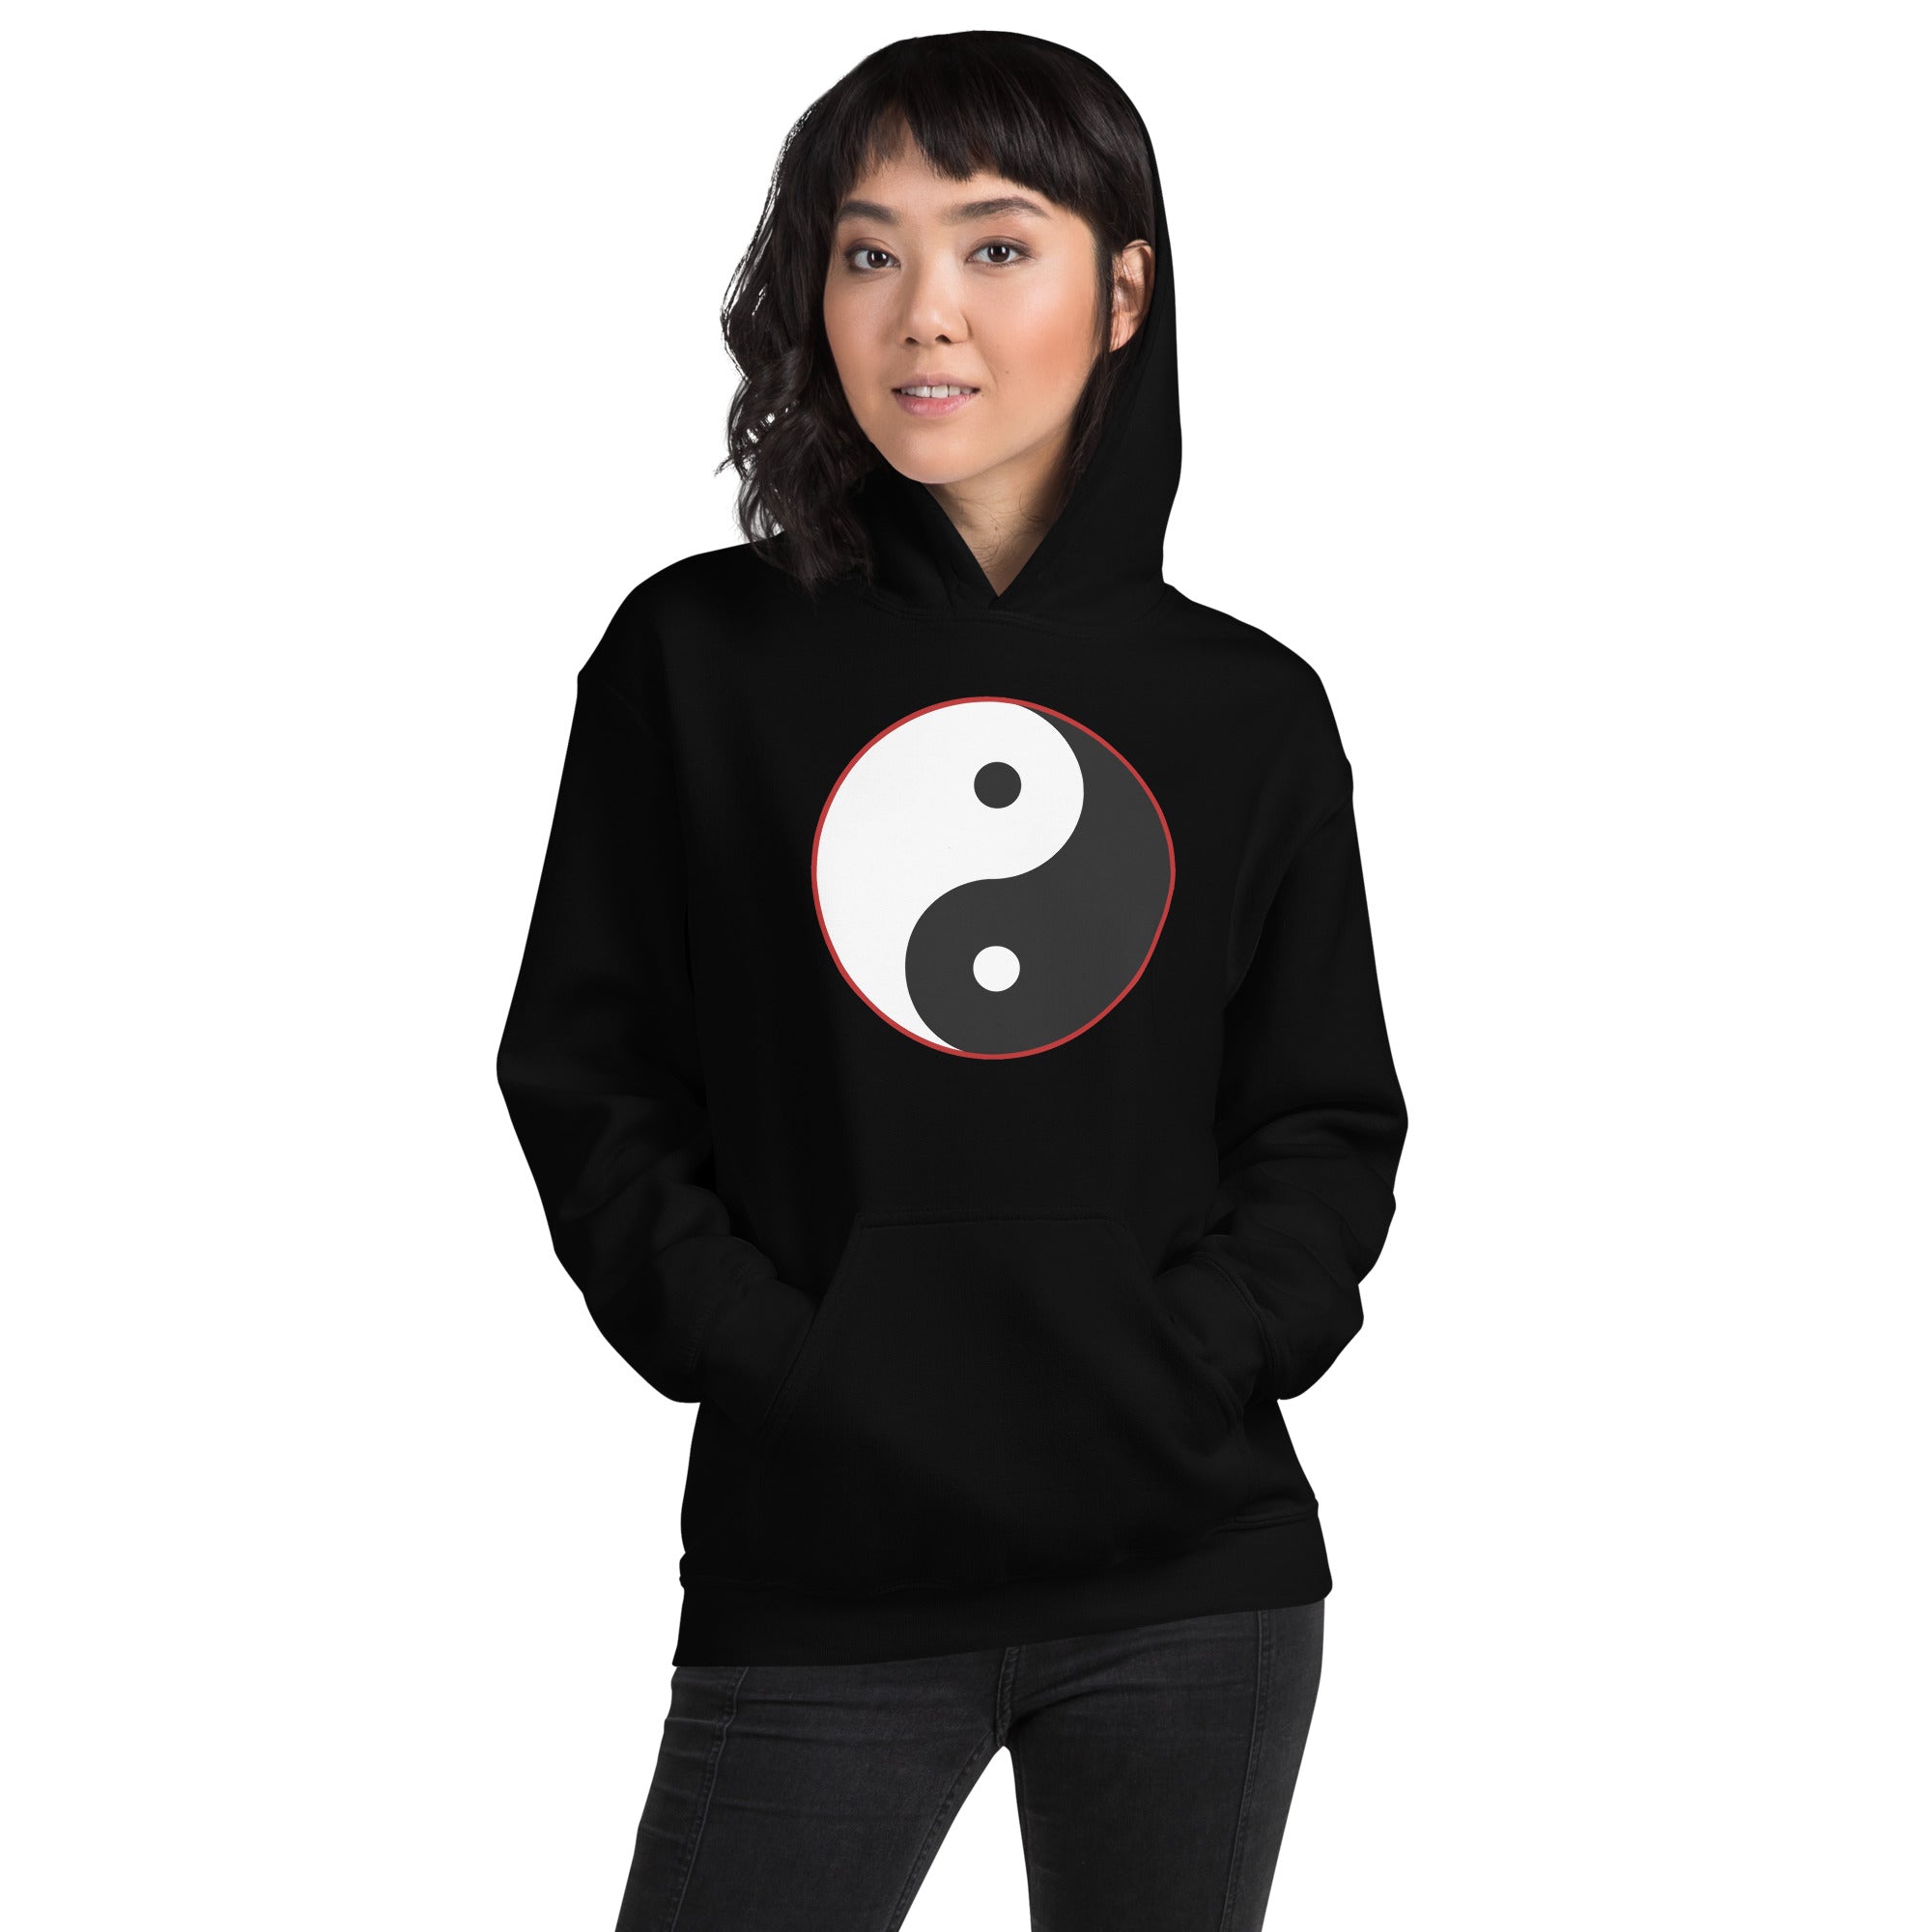 Yin and Yang Ancient Chinese Symbol Hoodie Sweatshirt